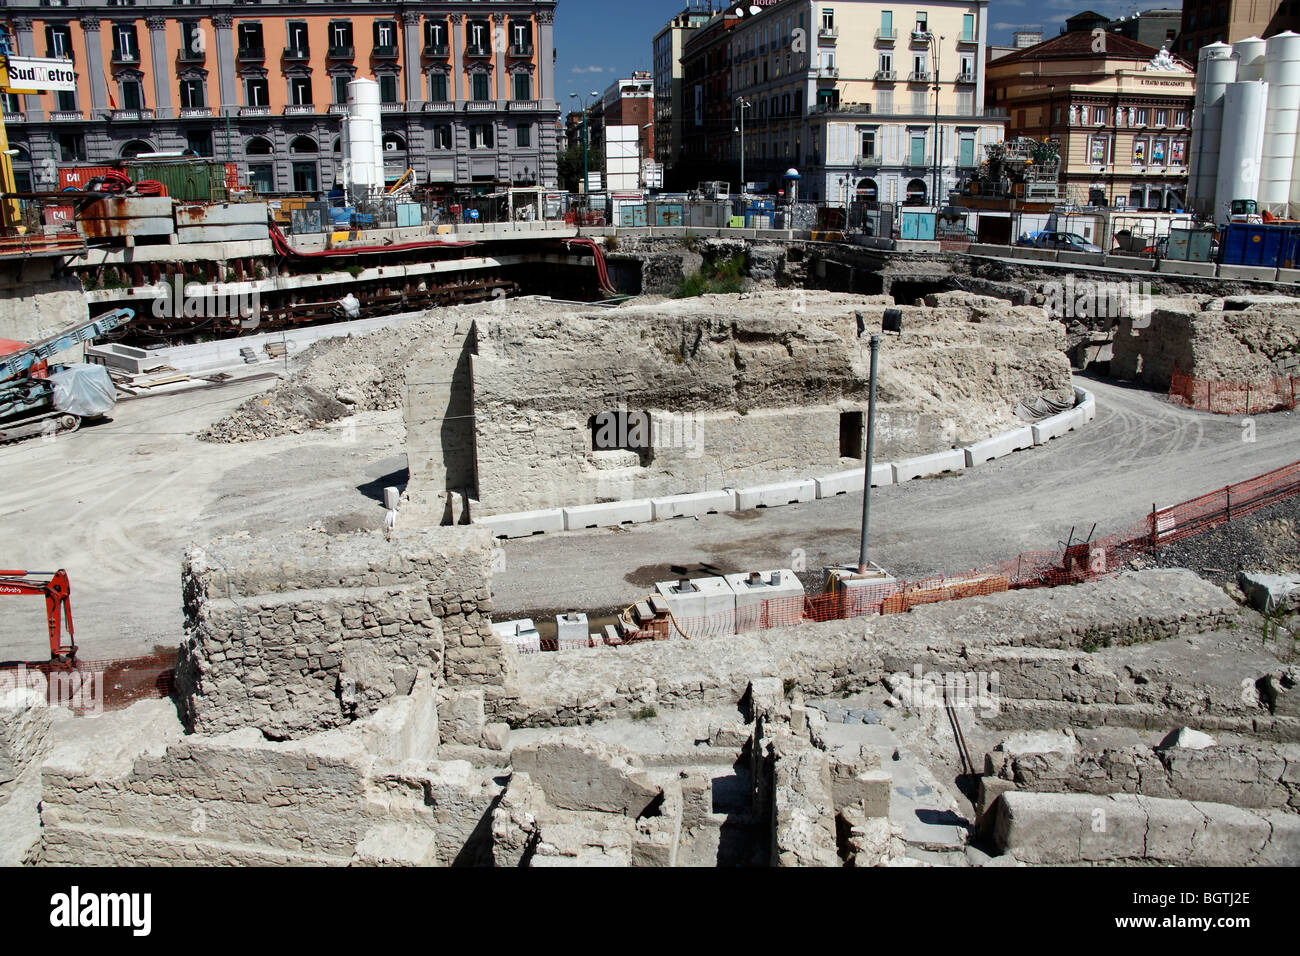 Neapel Ausgrabungen Antiker Ruinen Mitten in Neapel fouilles monde antique dans Napoli Banque D'Images